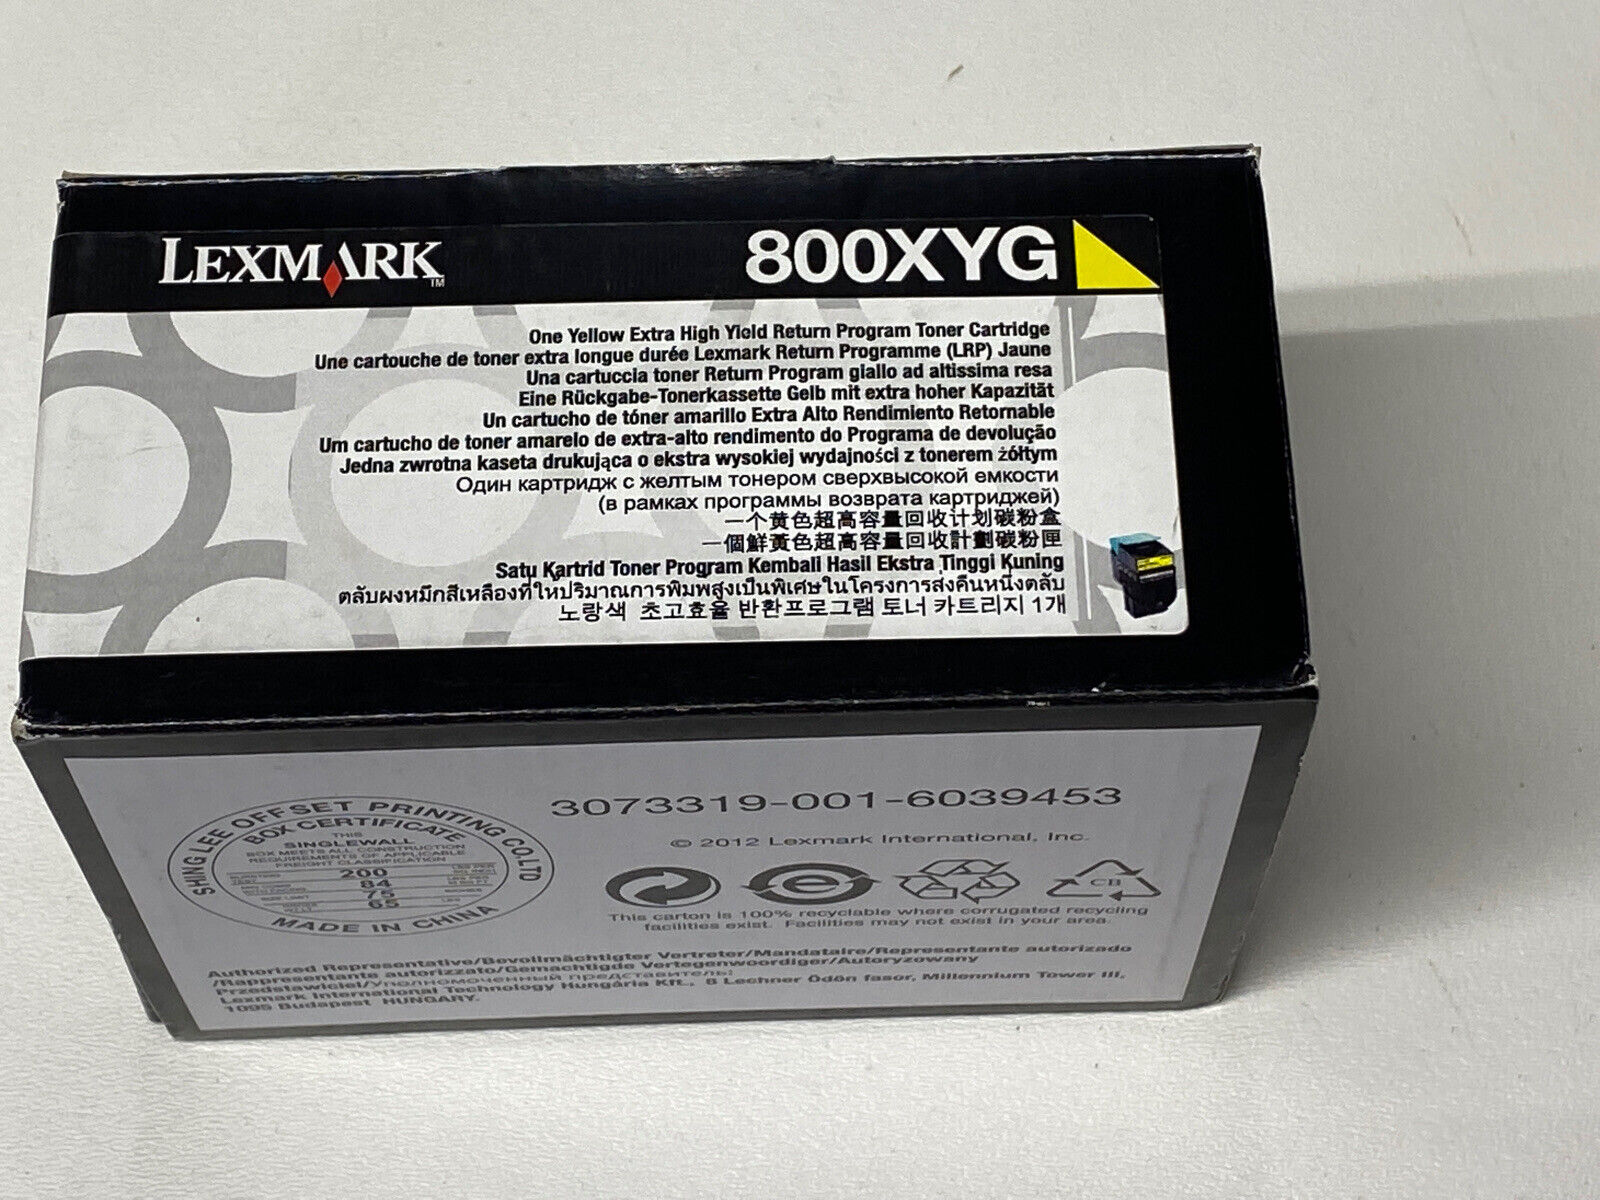 LEXMARK - BPD SUPPLIES 80C0XYG CX 510 YELLOW EXTRA HIGH YIELD